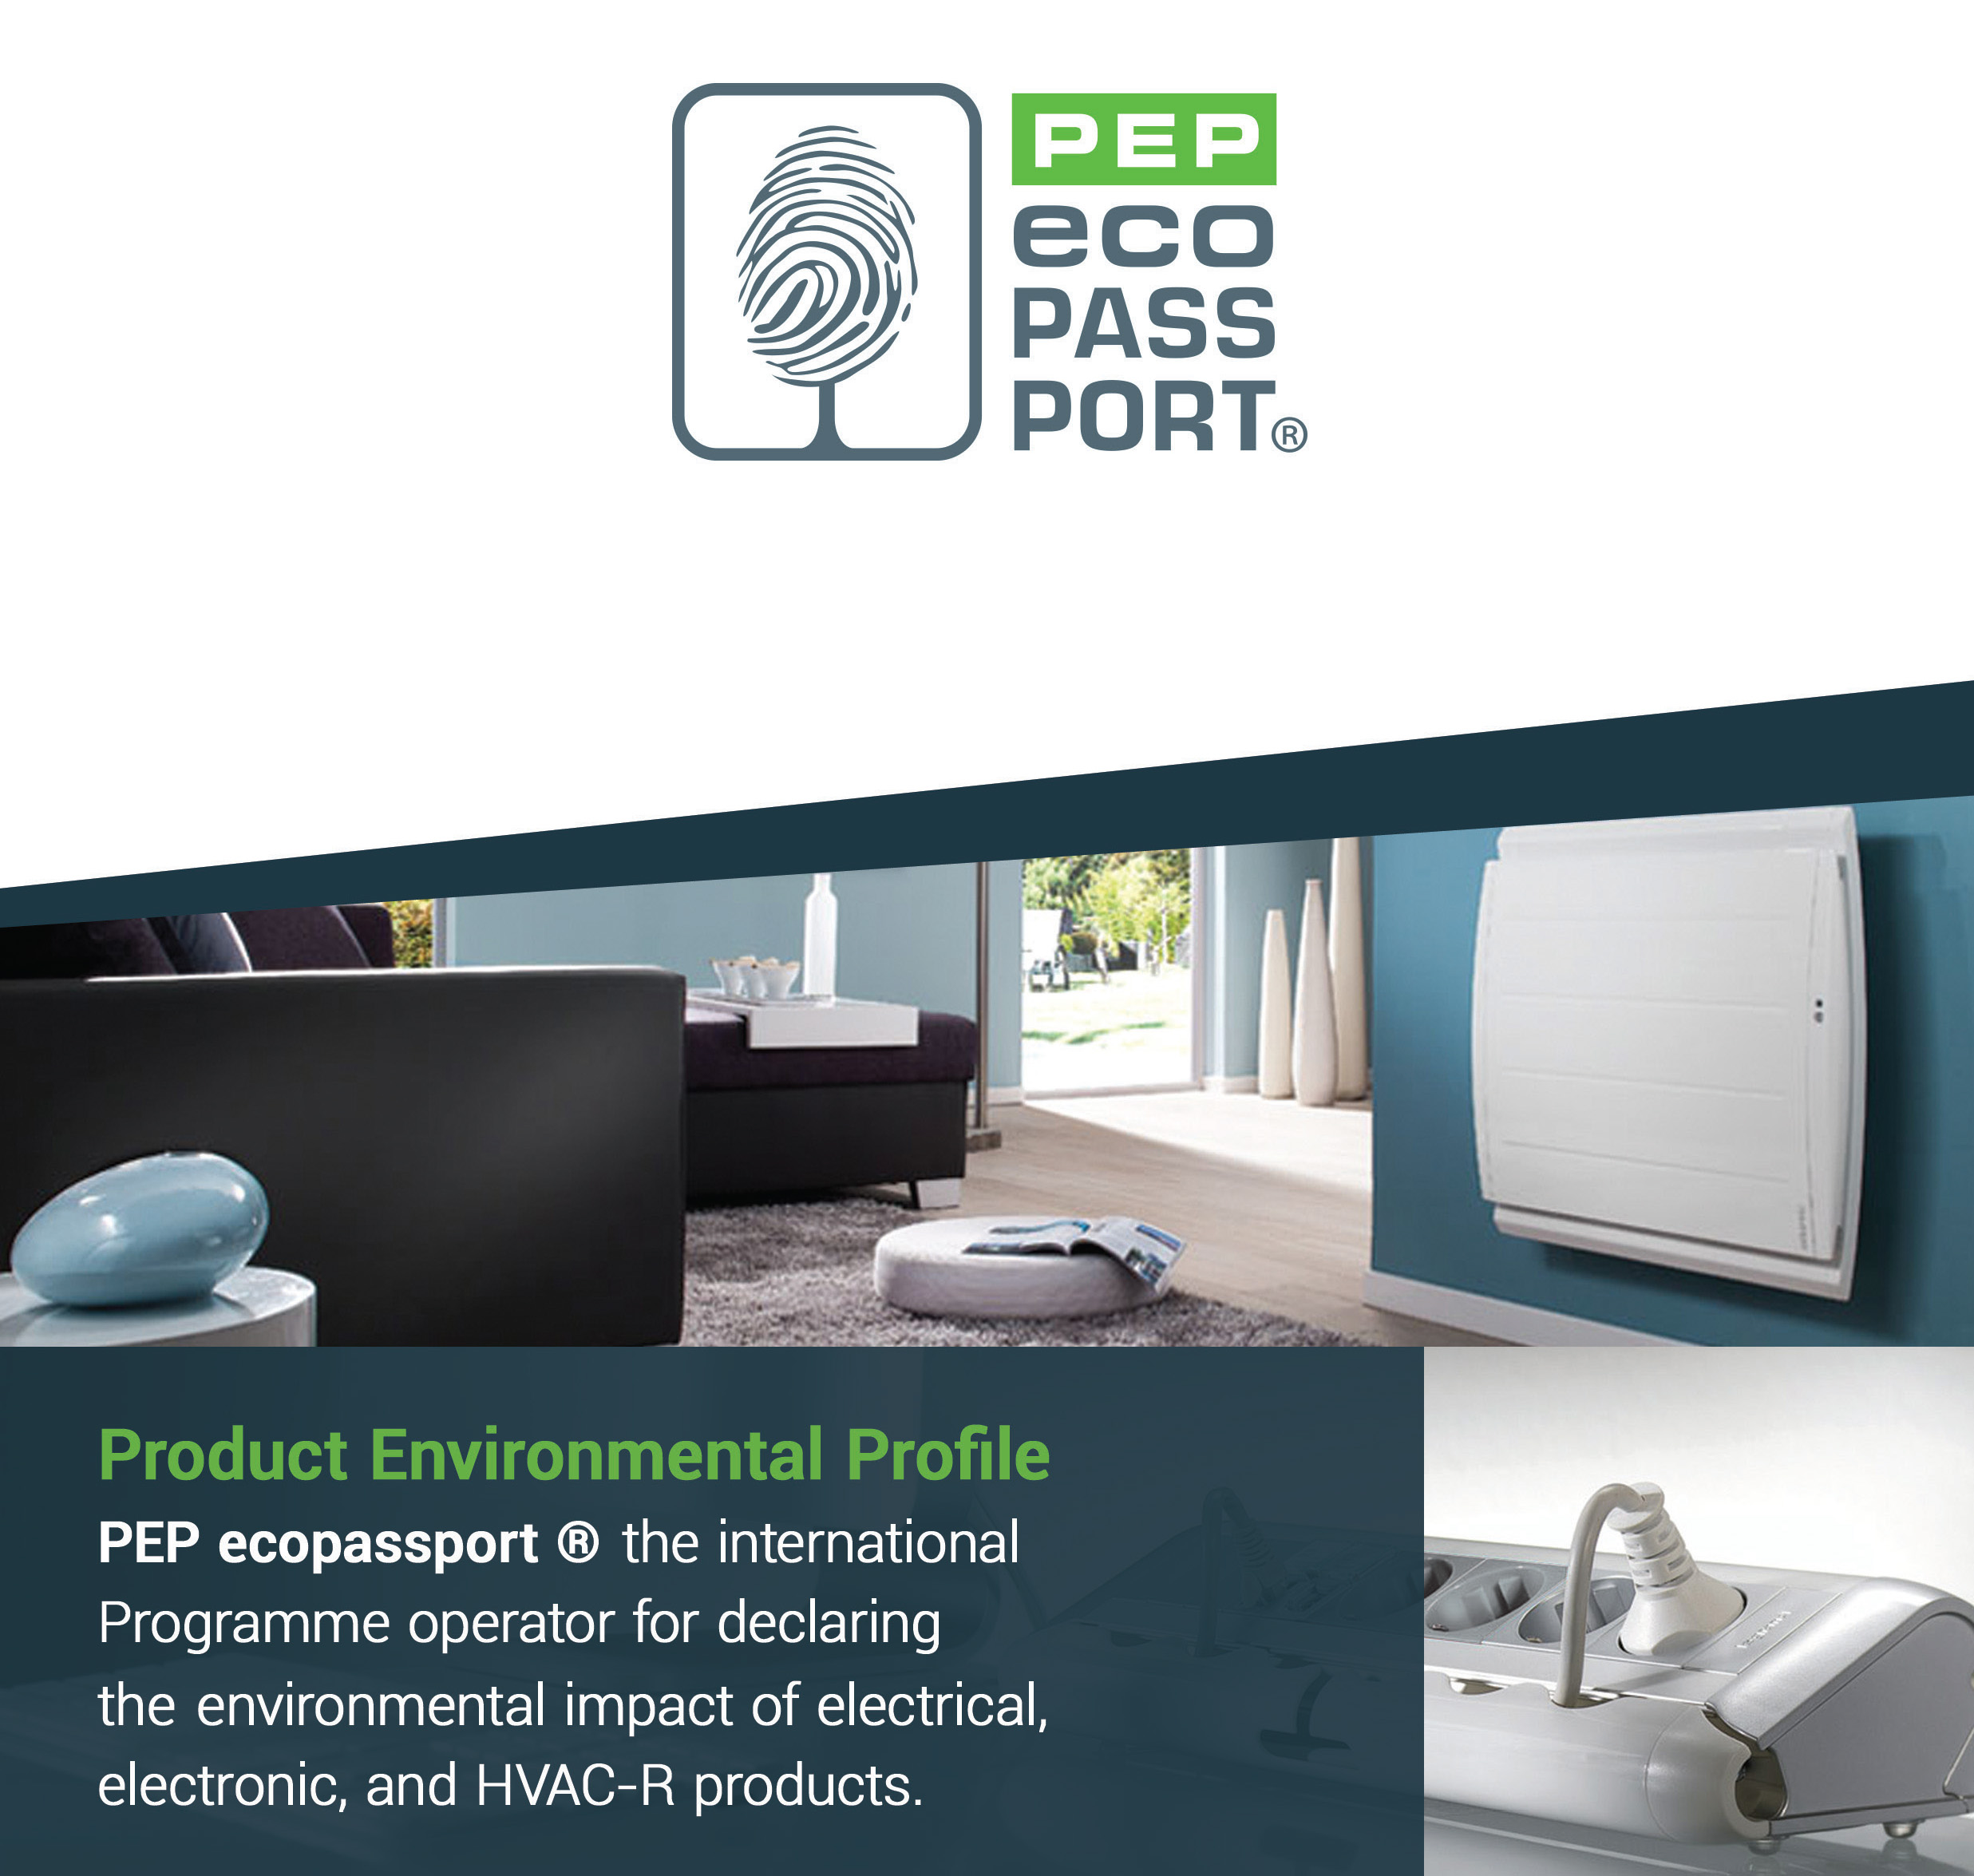 Crystal also obtains the PEP Ecopassport Environmental Declaration